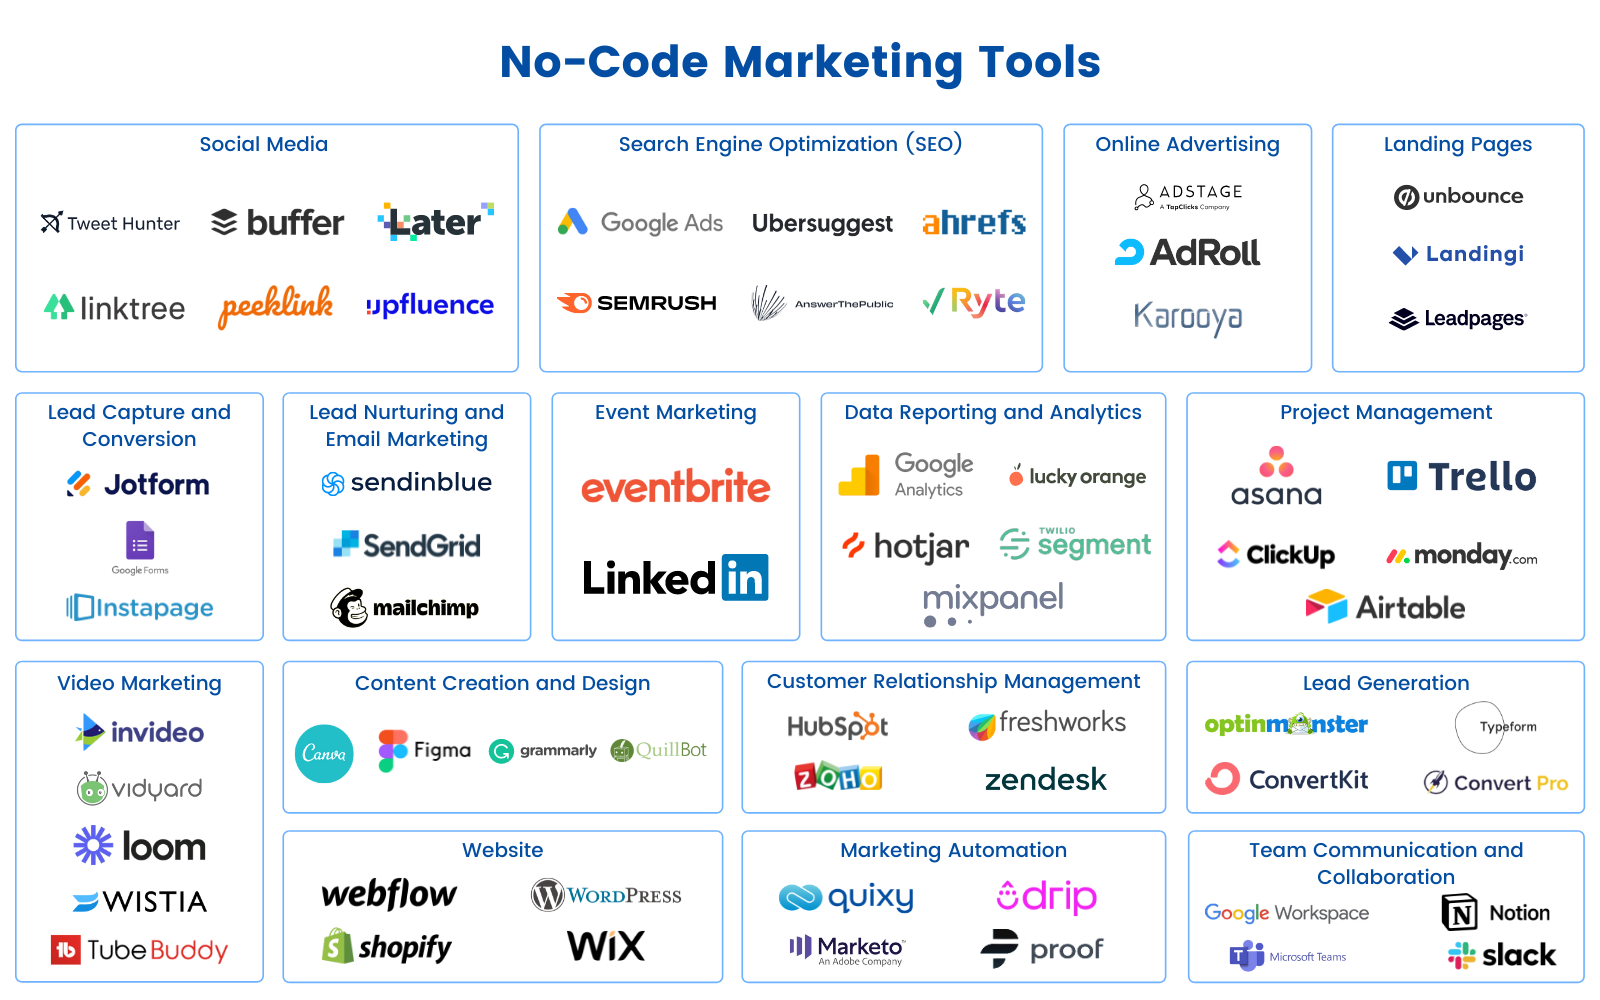 No-Code Marketing Tools